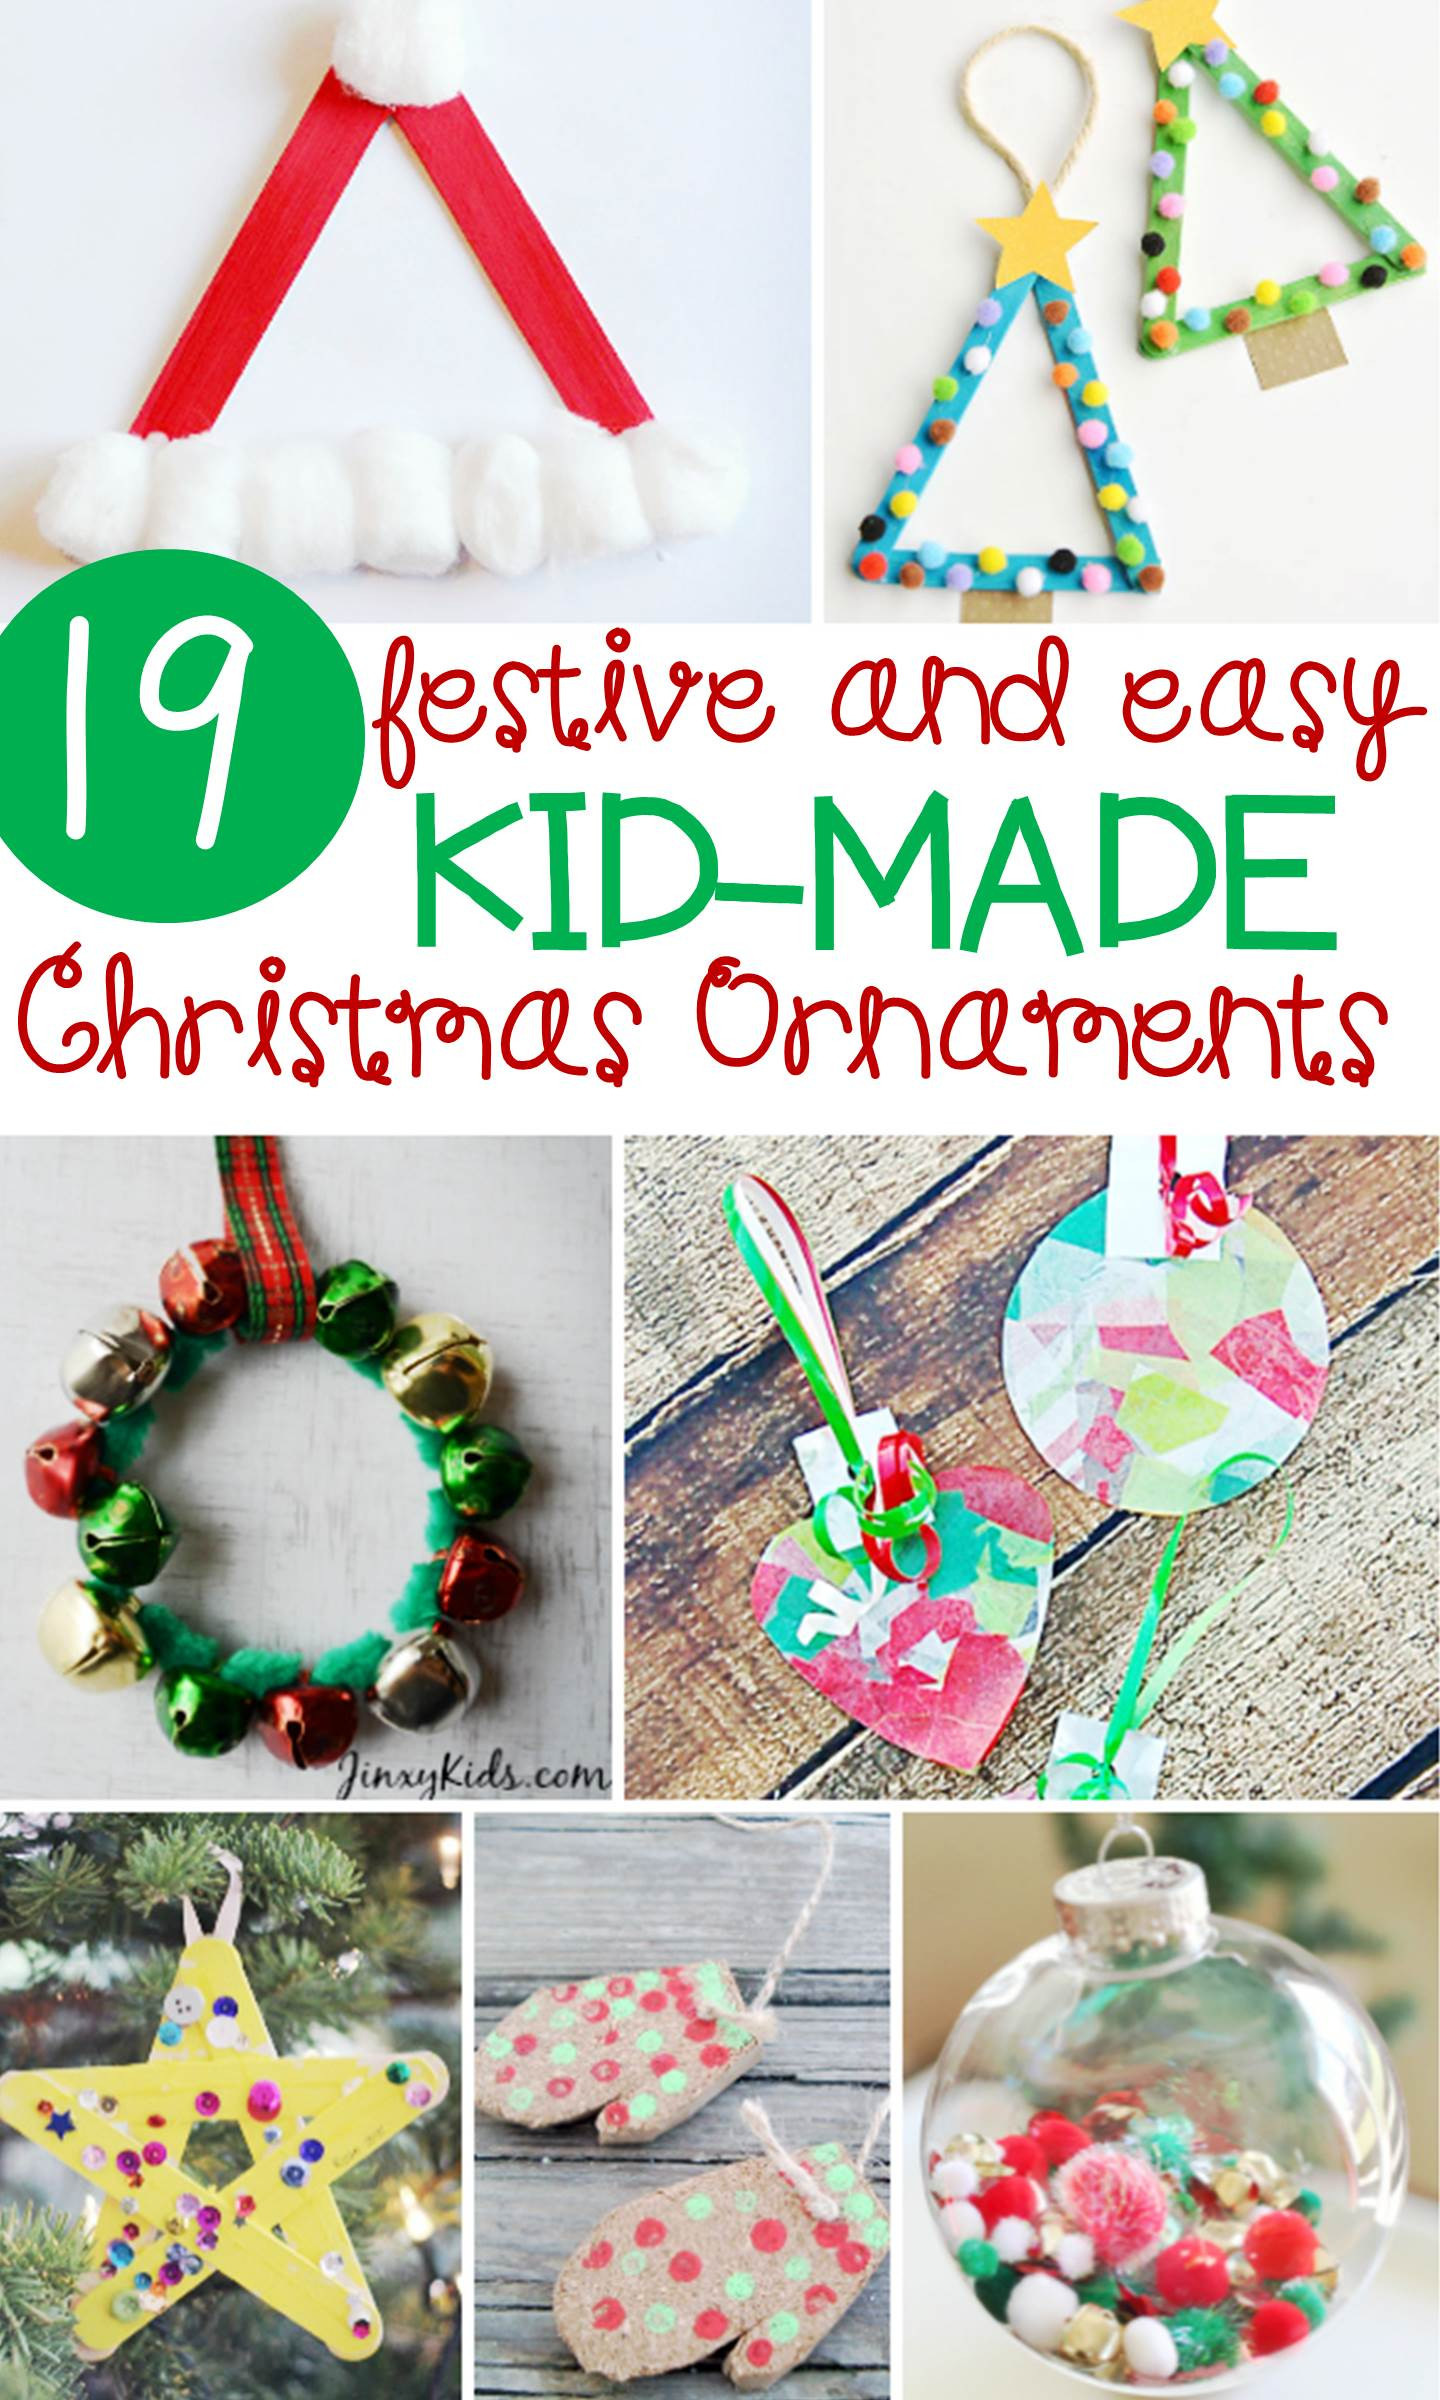 Preschool Christmas Craft Ideas
 Festive and Simple Kids Christmas Ornaments The